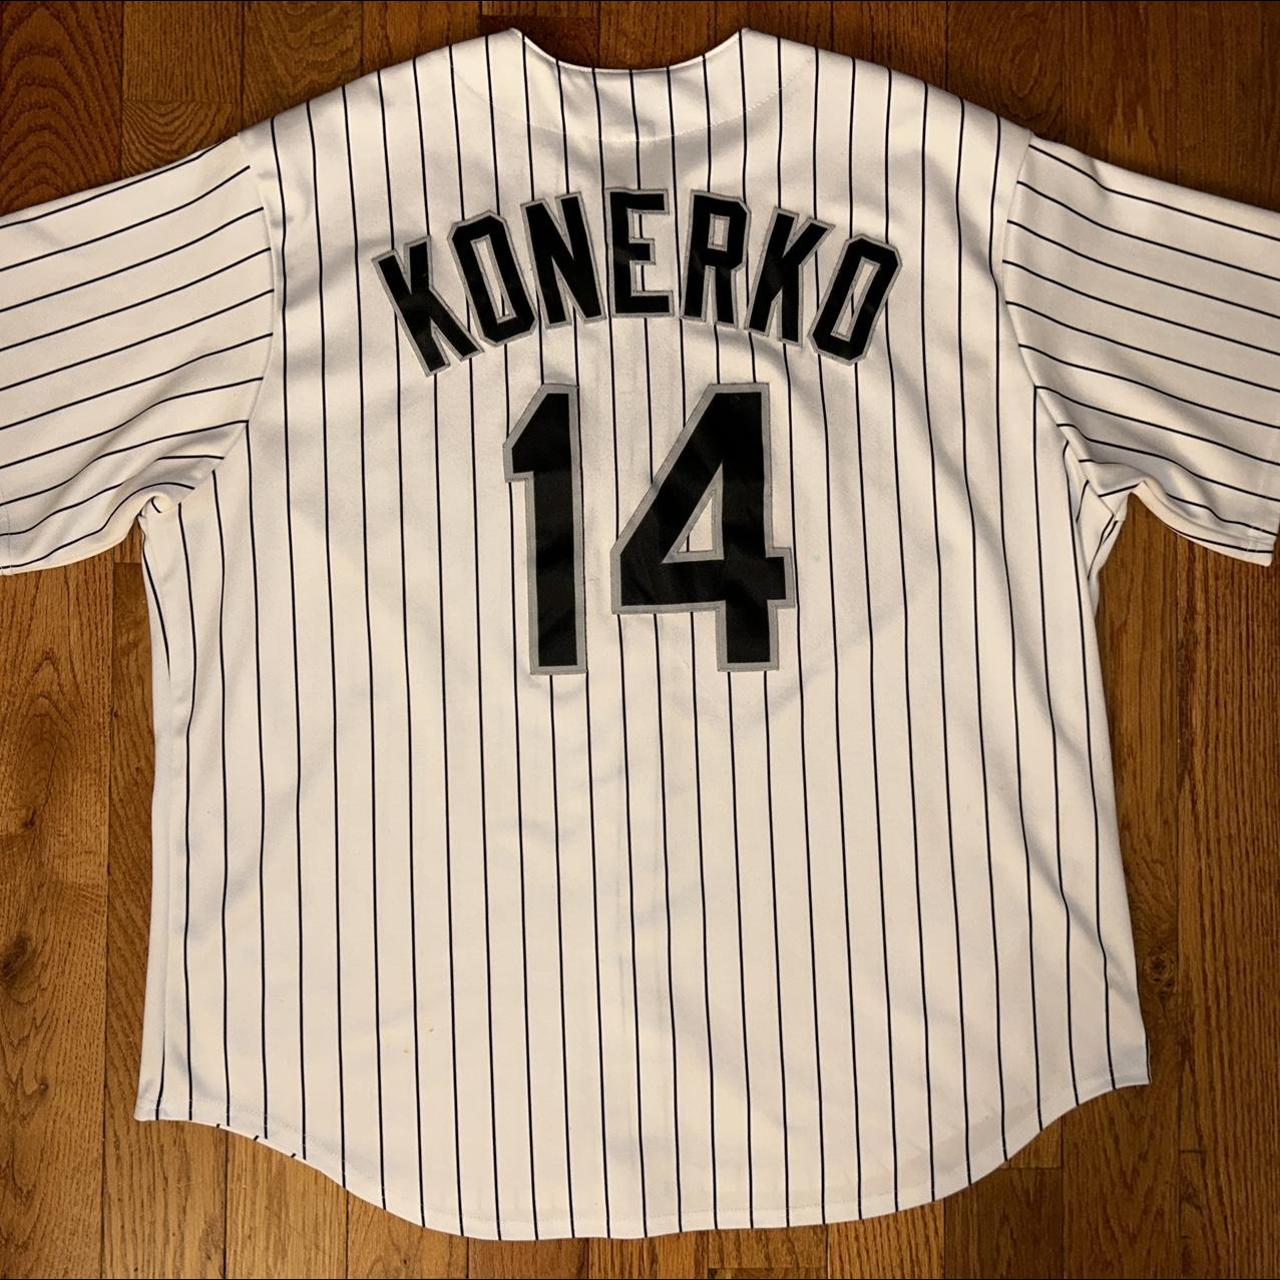 Paul Konerko Chicago White Sox Majestic Pinstripe - Depop